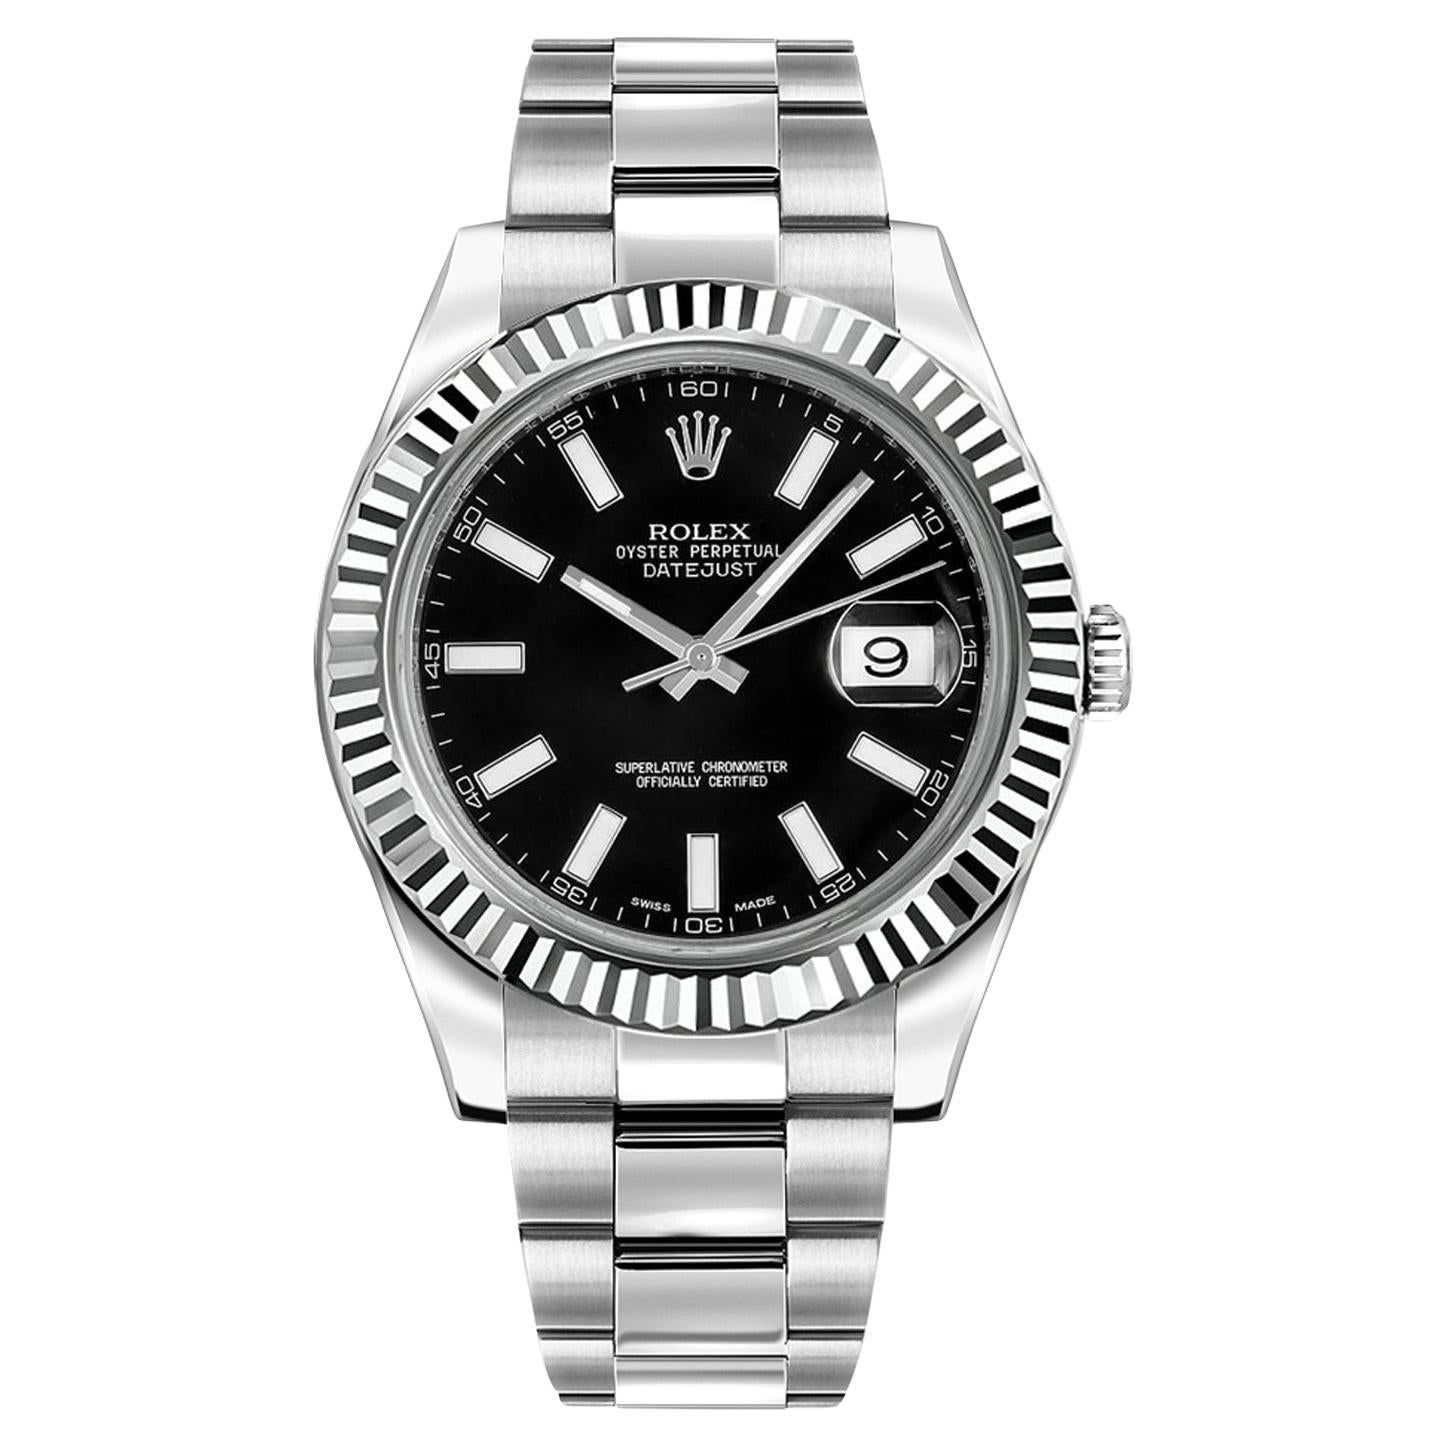 Rolex Datejust II Black Index Dial Stainless Steel Men's Watch 116334